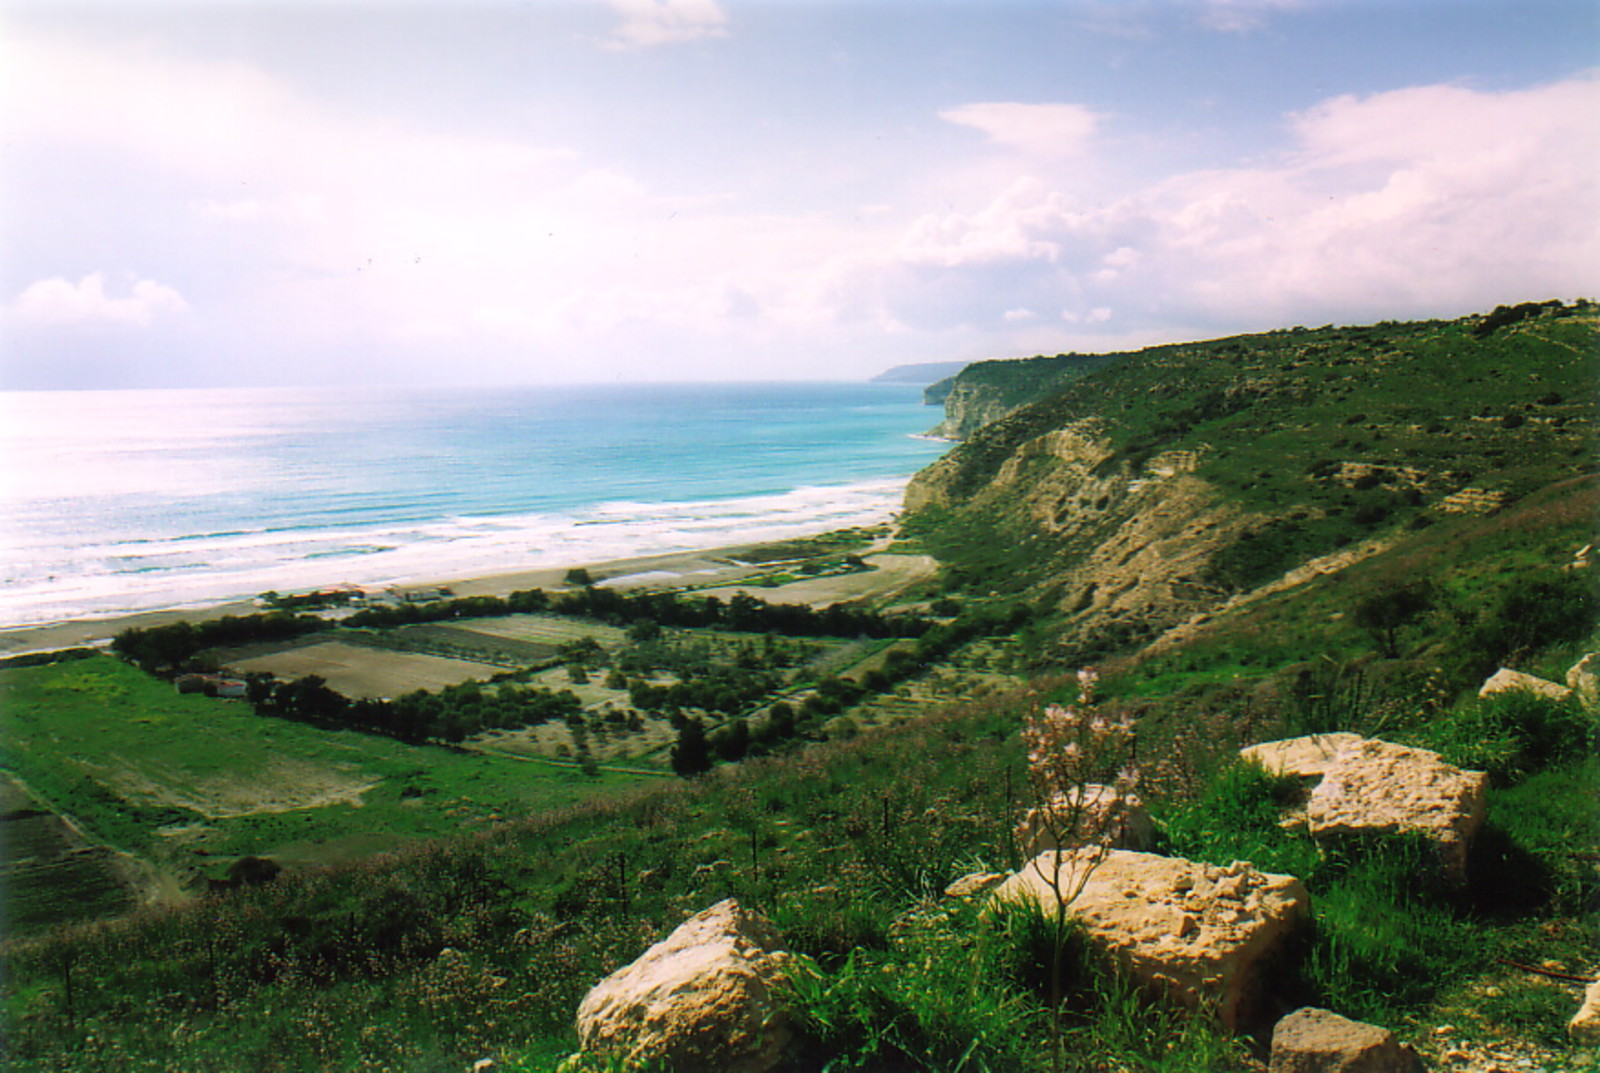 A coastal view from Kourion